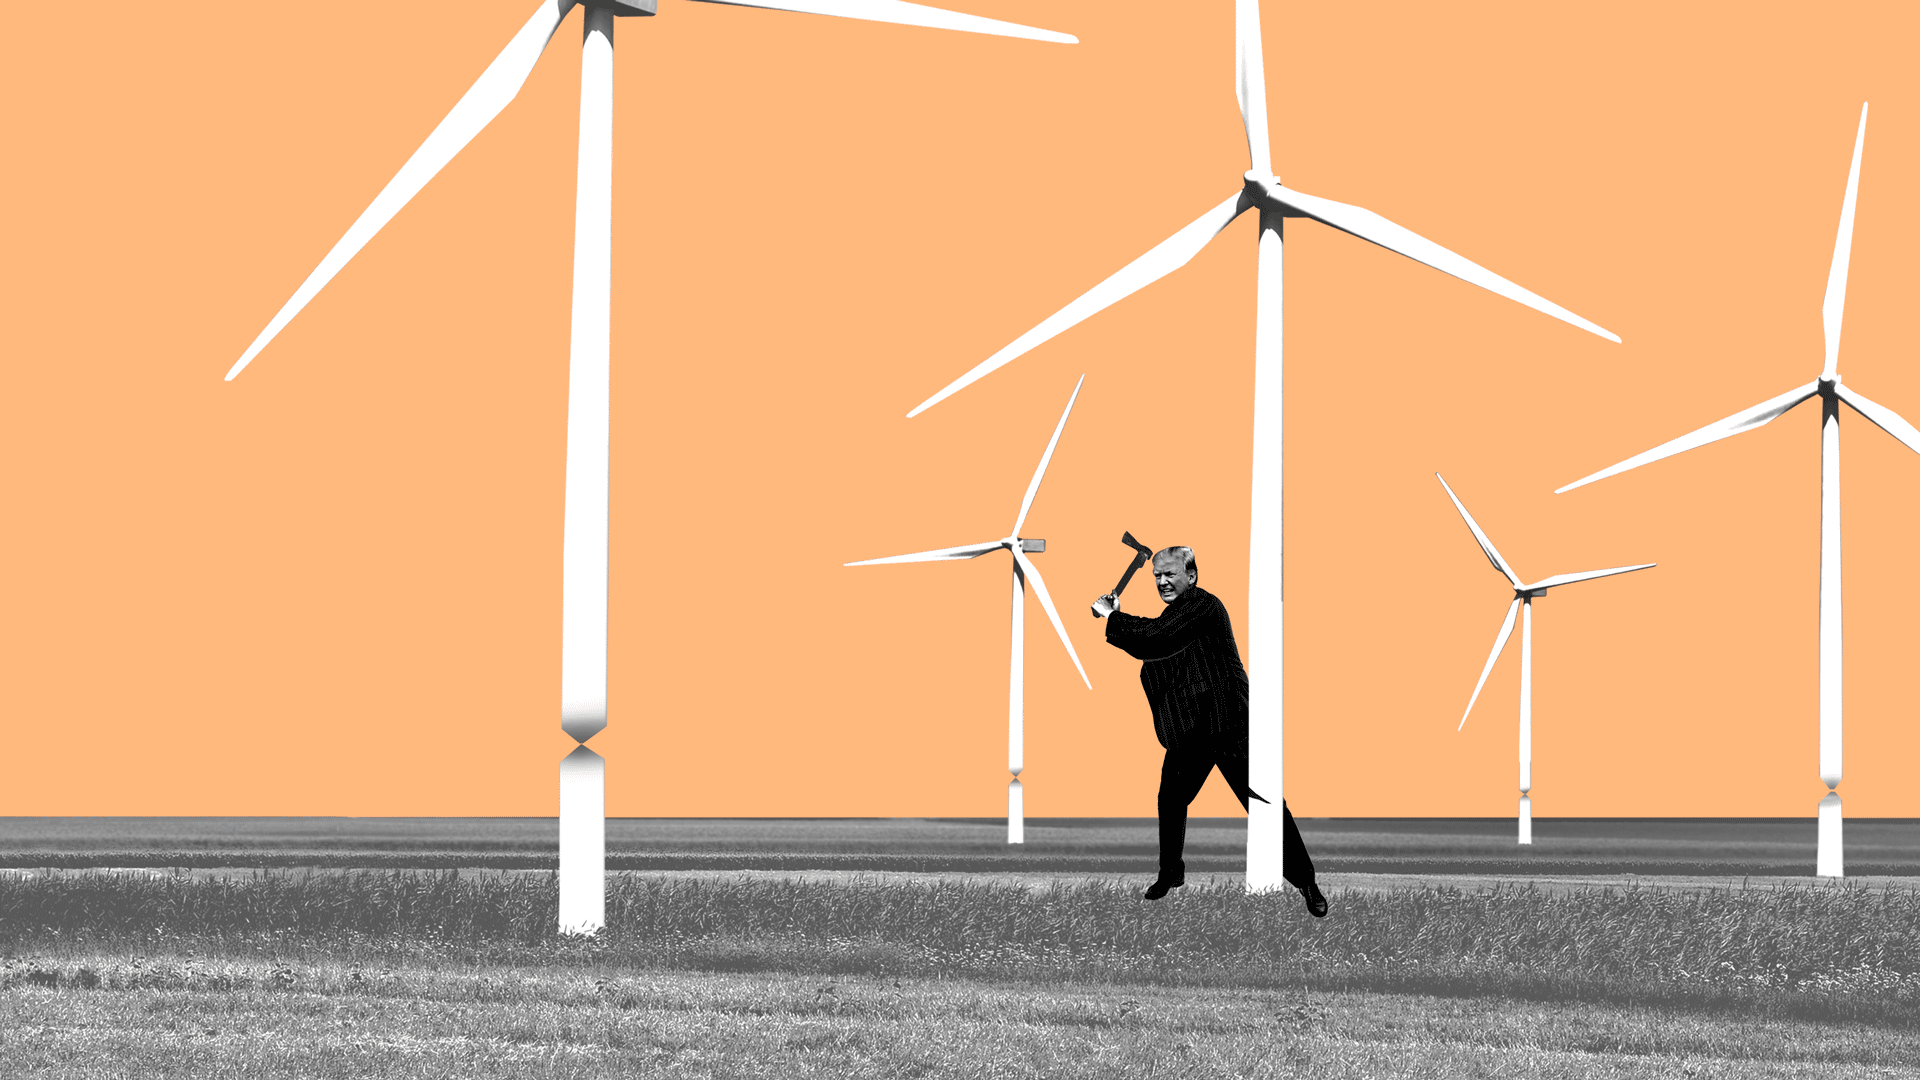 Illustration of President Trump chopping down a wind turbine.